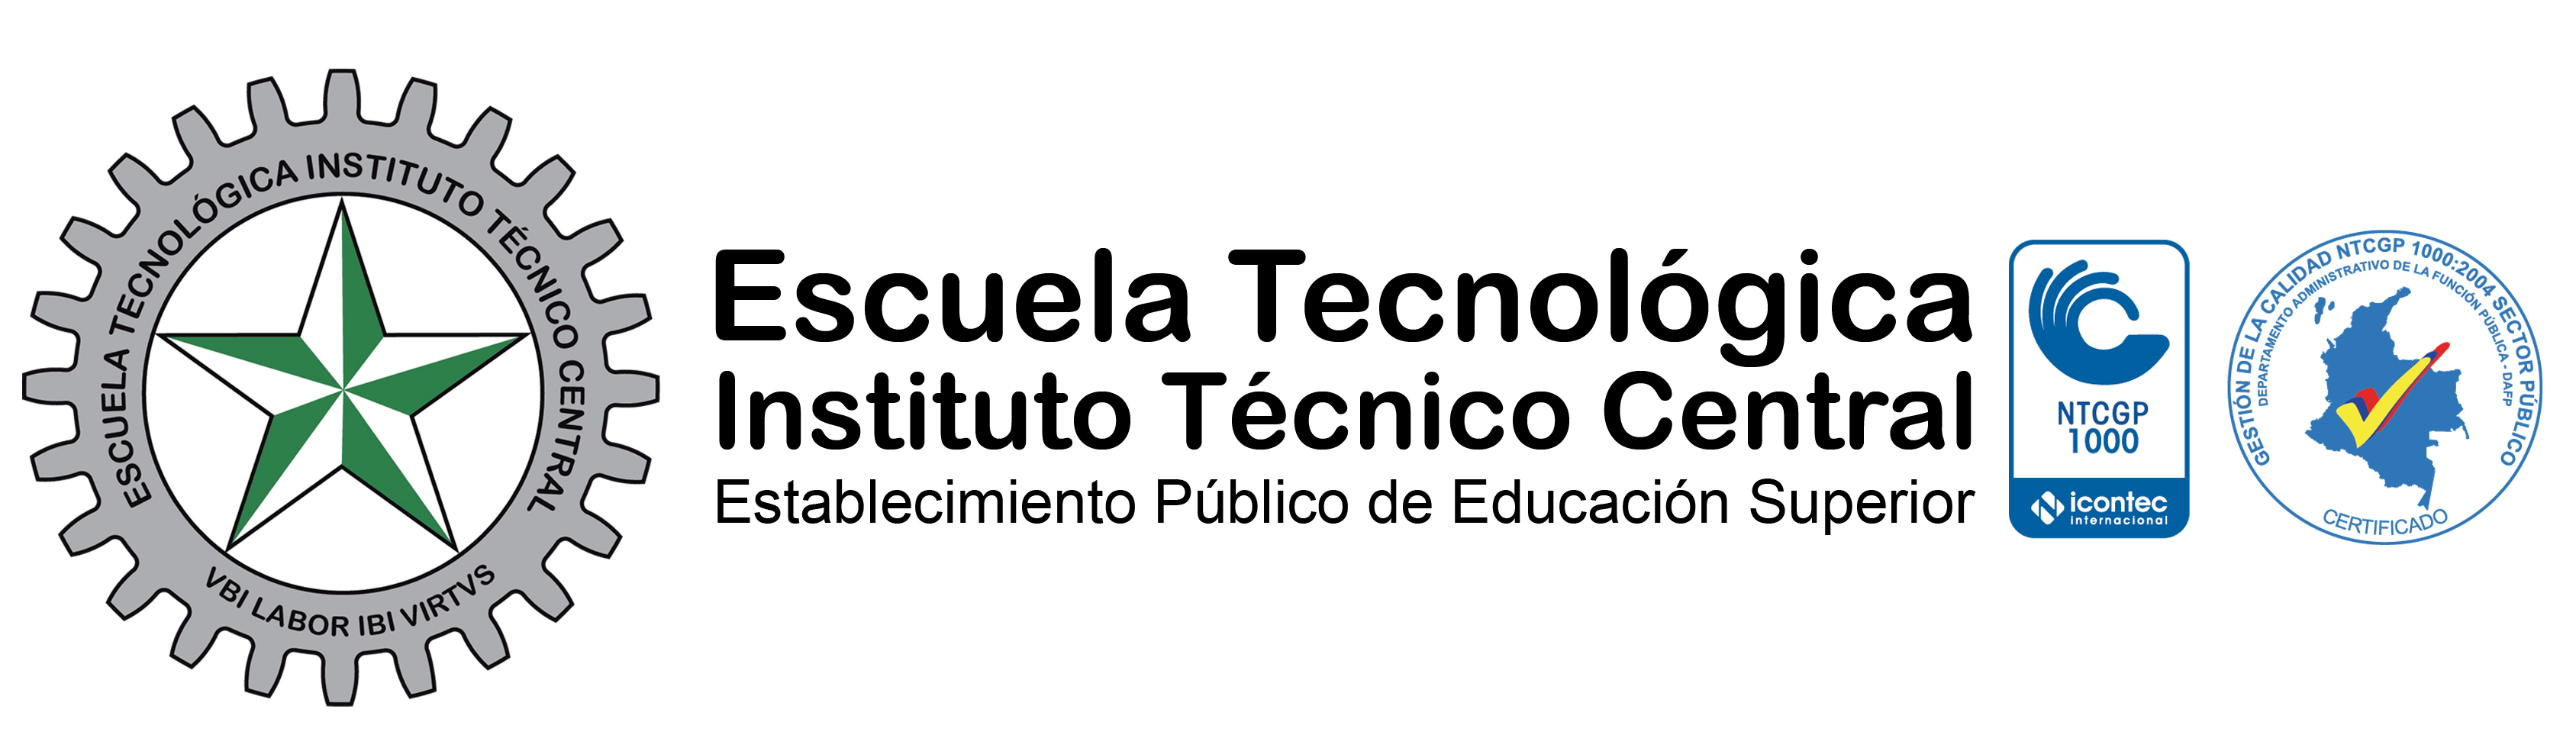 Escuela Tecnológica Instituto Técnico Central